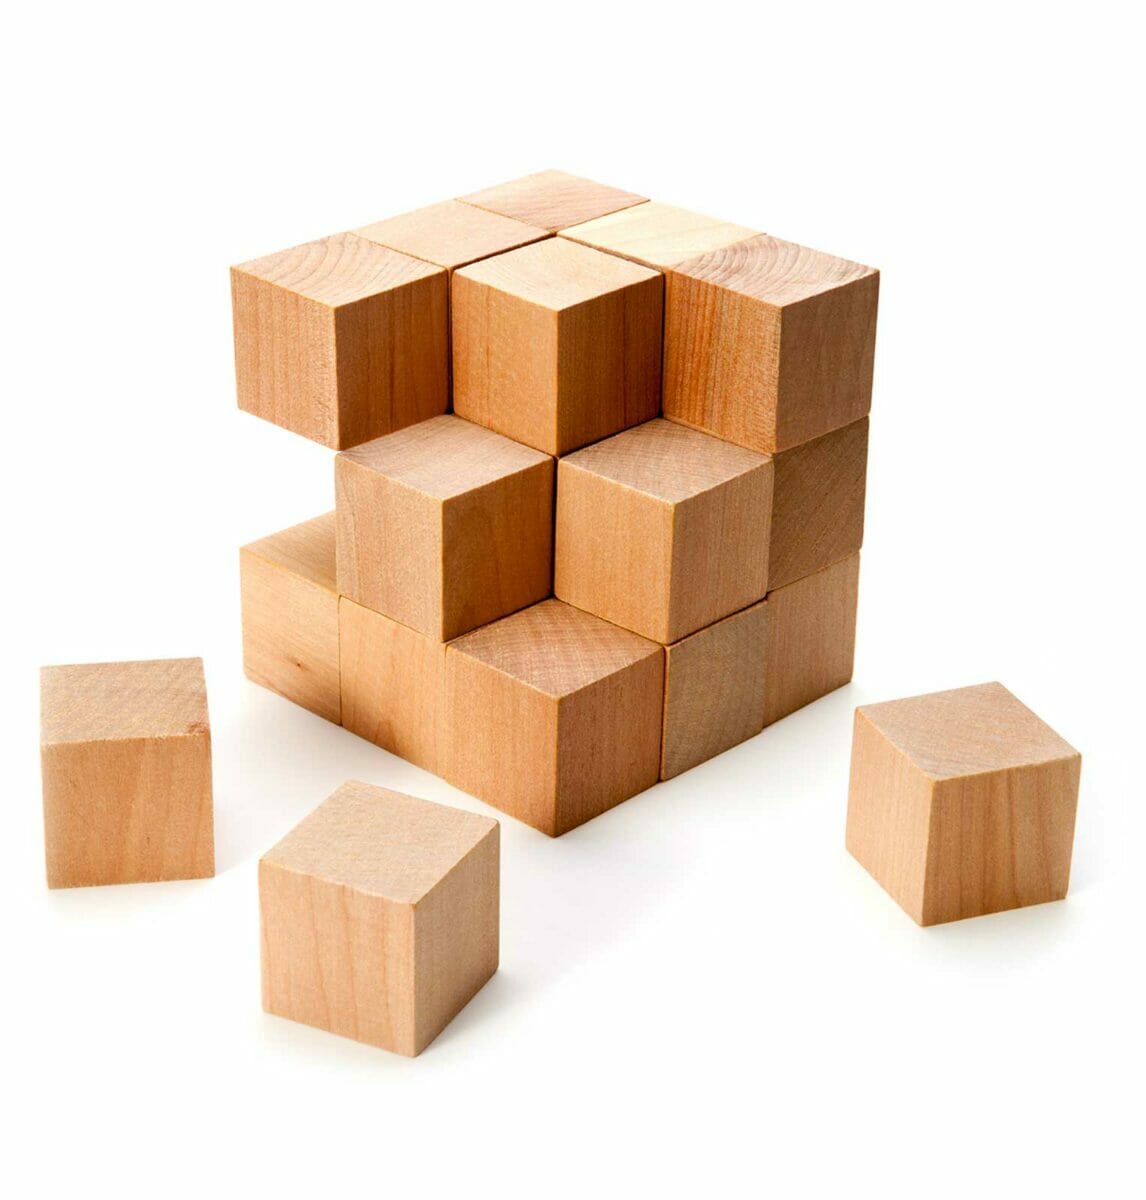 Wooden block cubes